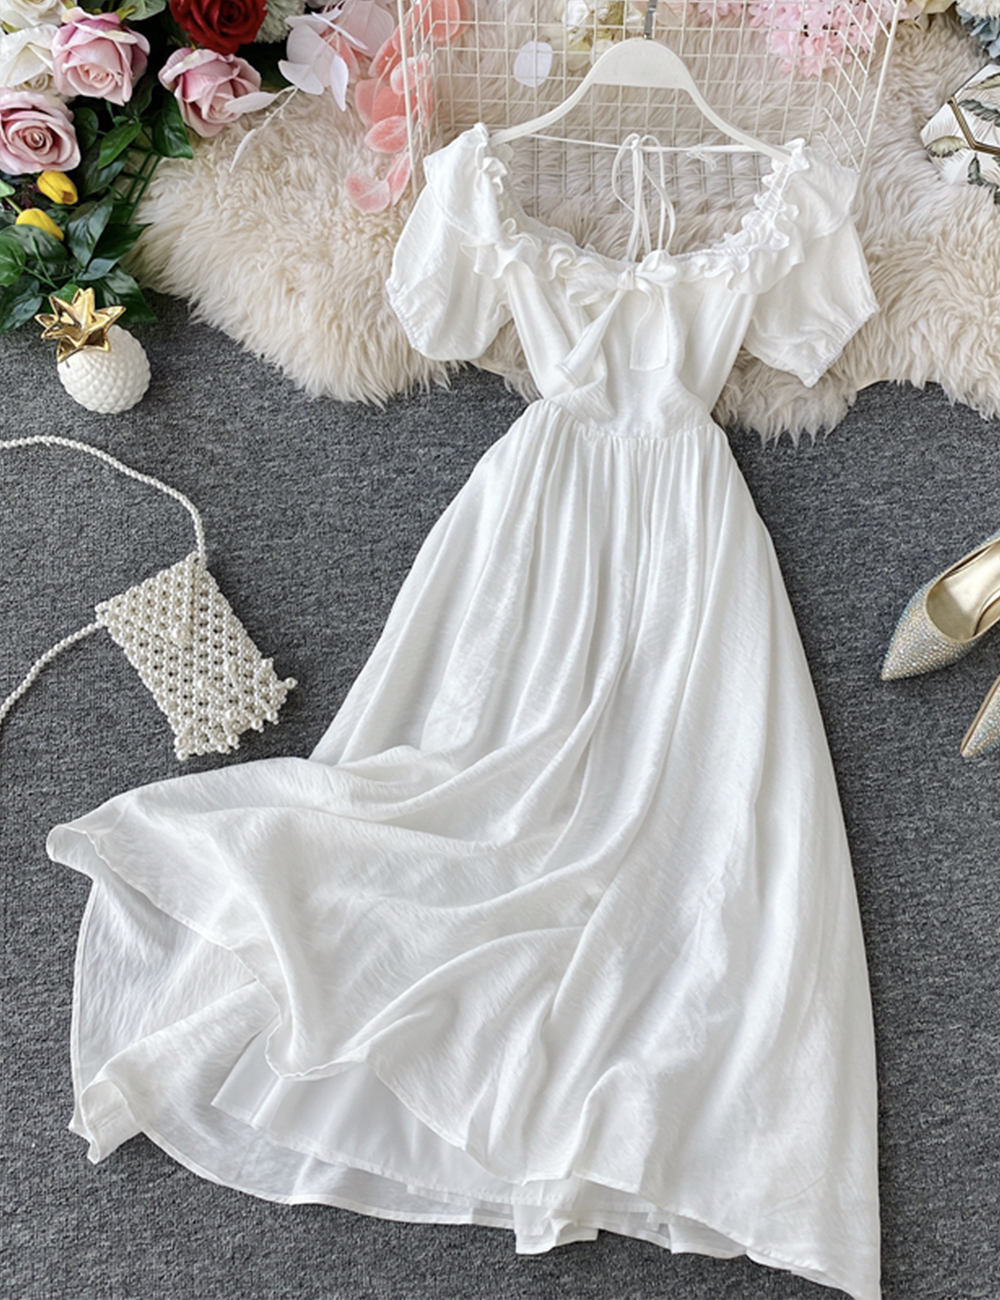 Beautiful Women in Wedding Dresses · Free Stock Photo